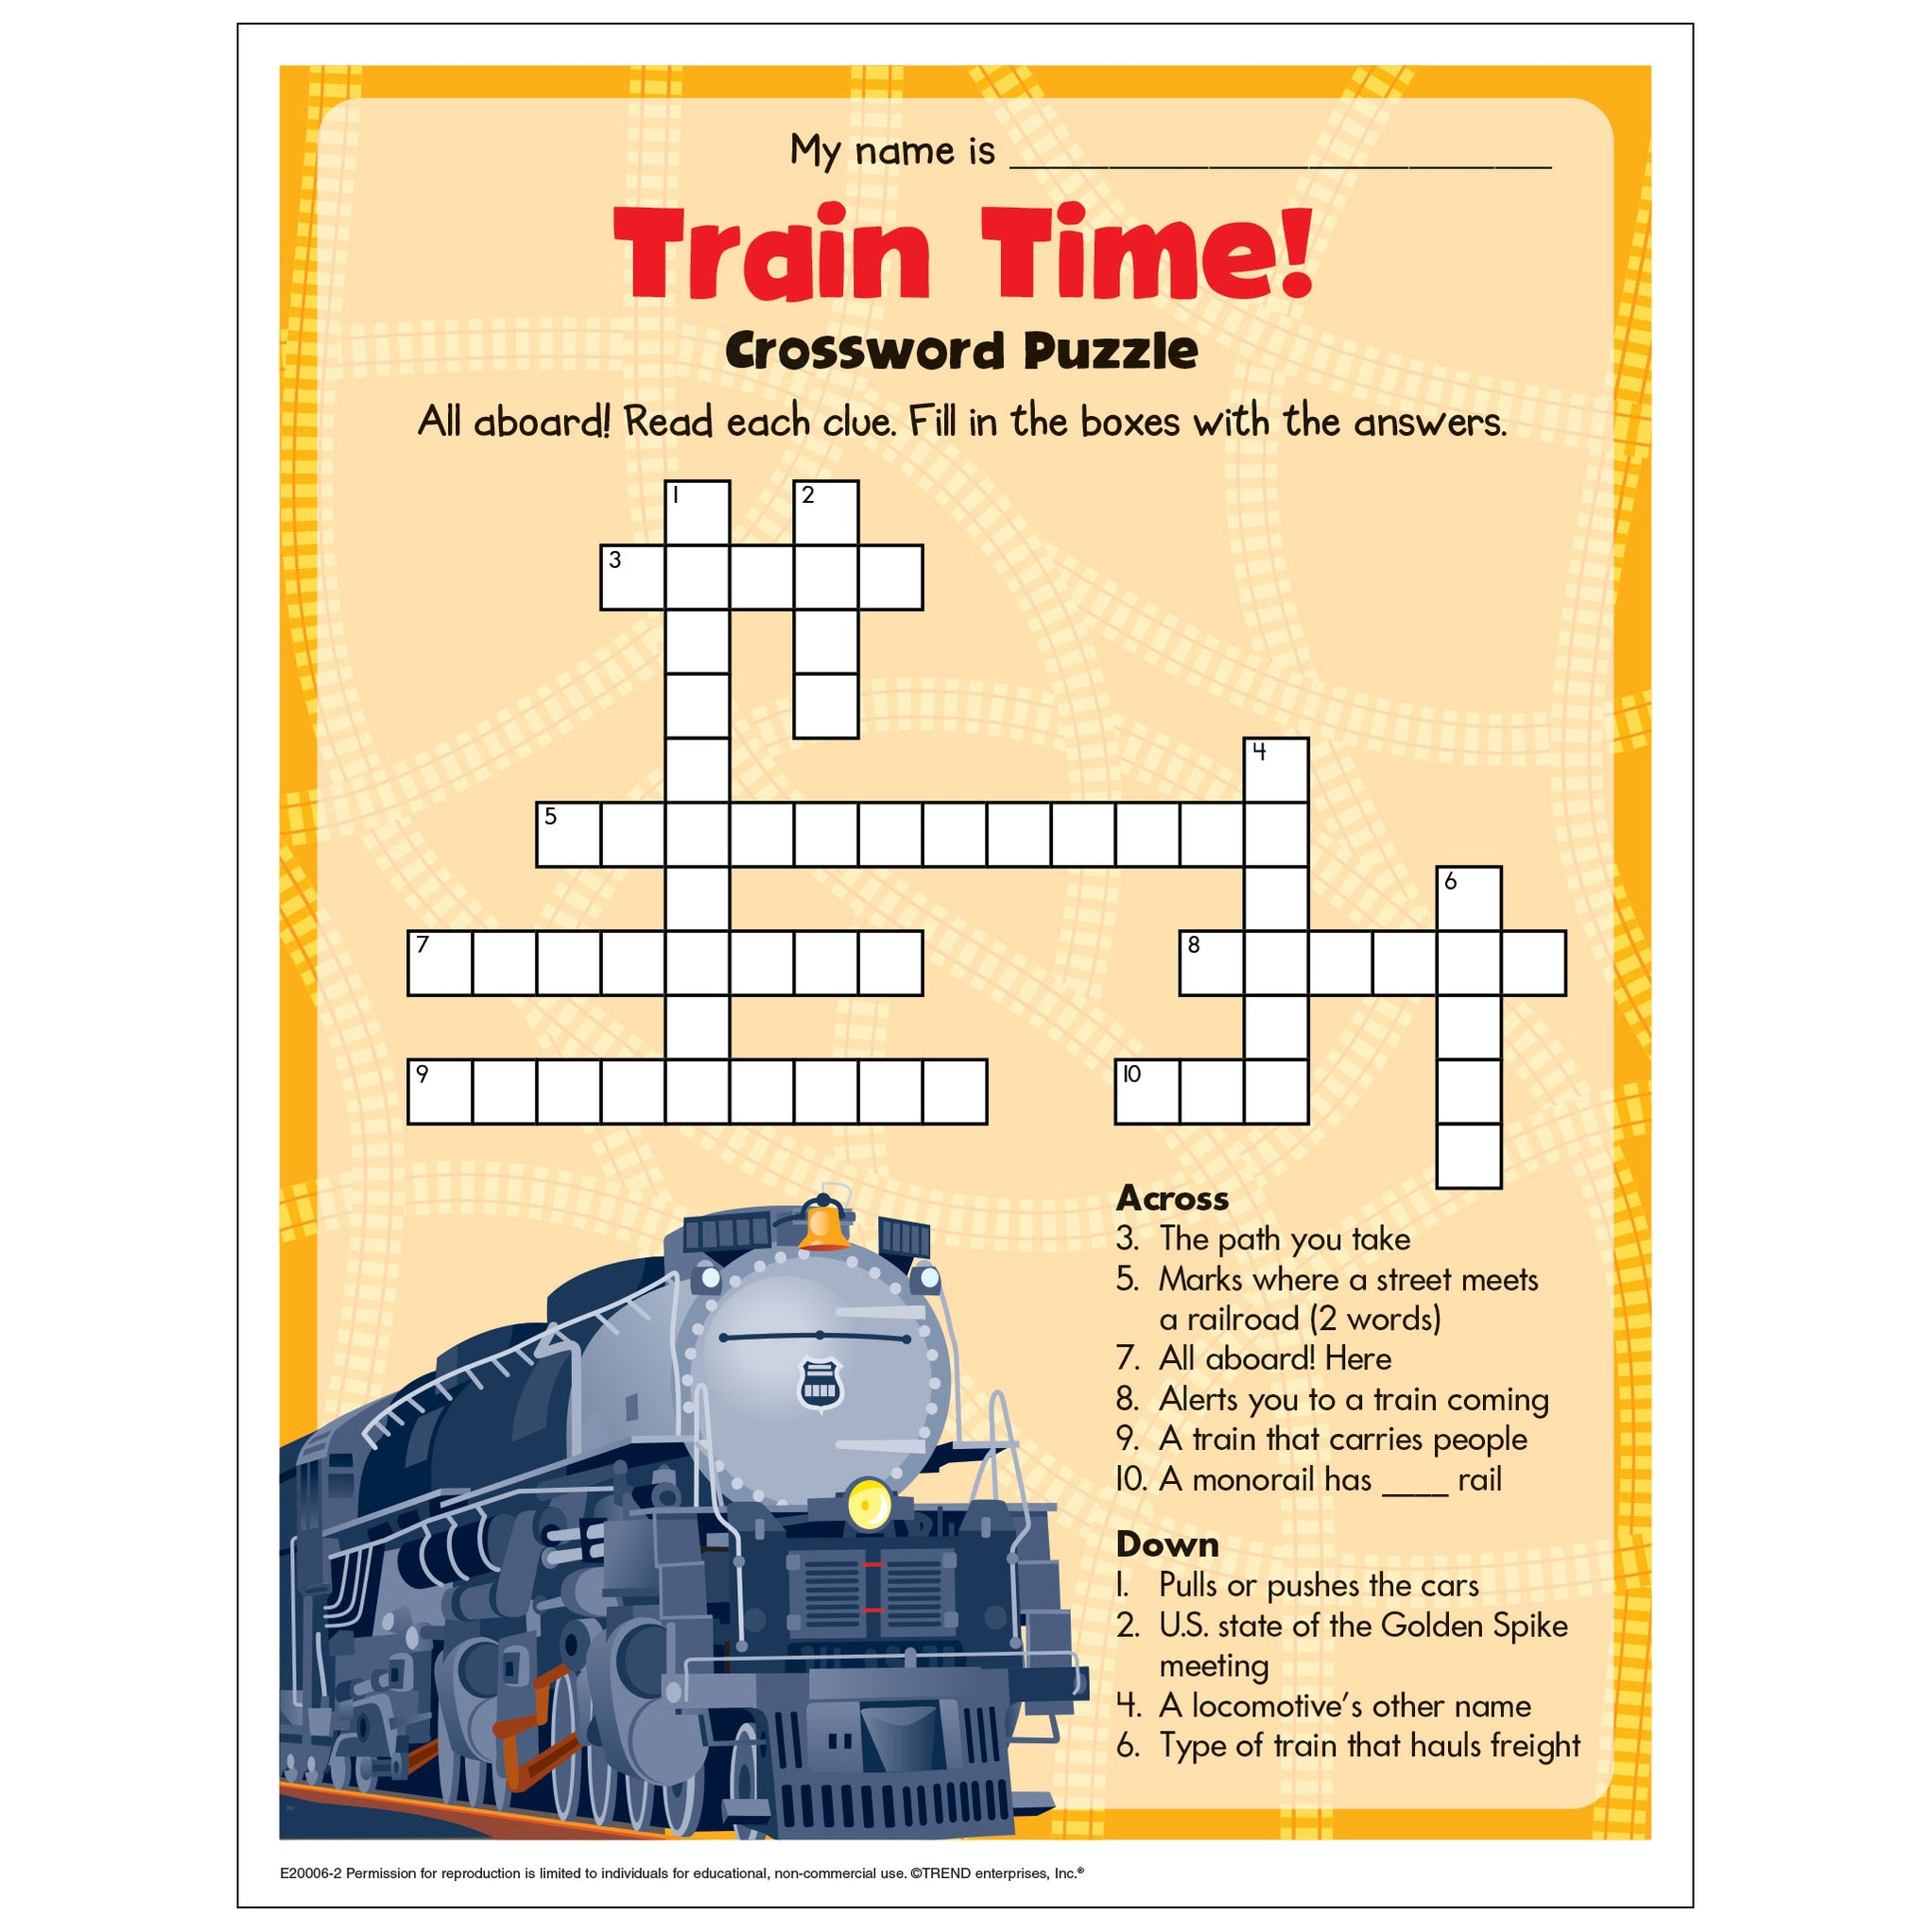 train travel crossword clue